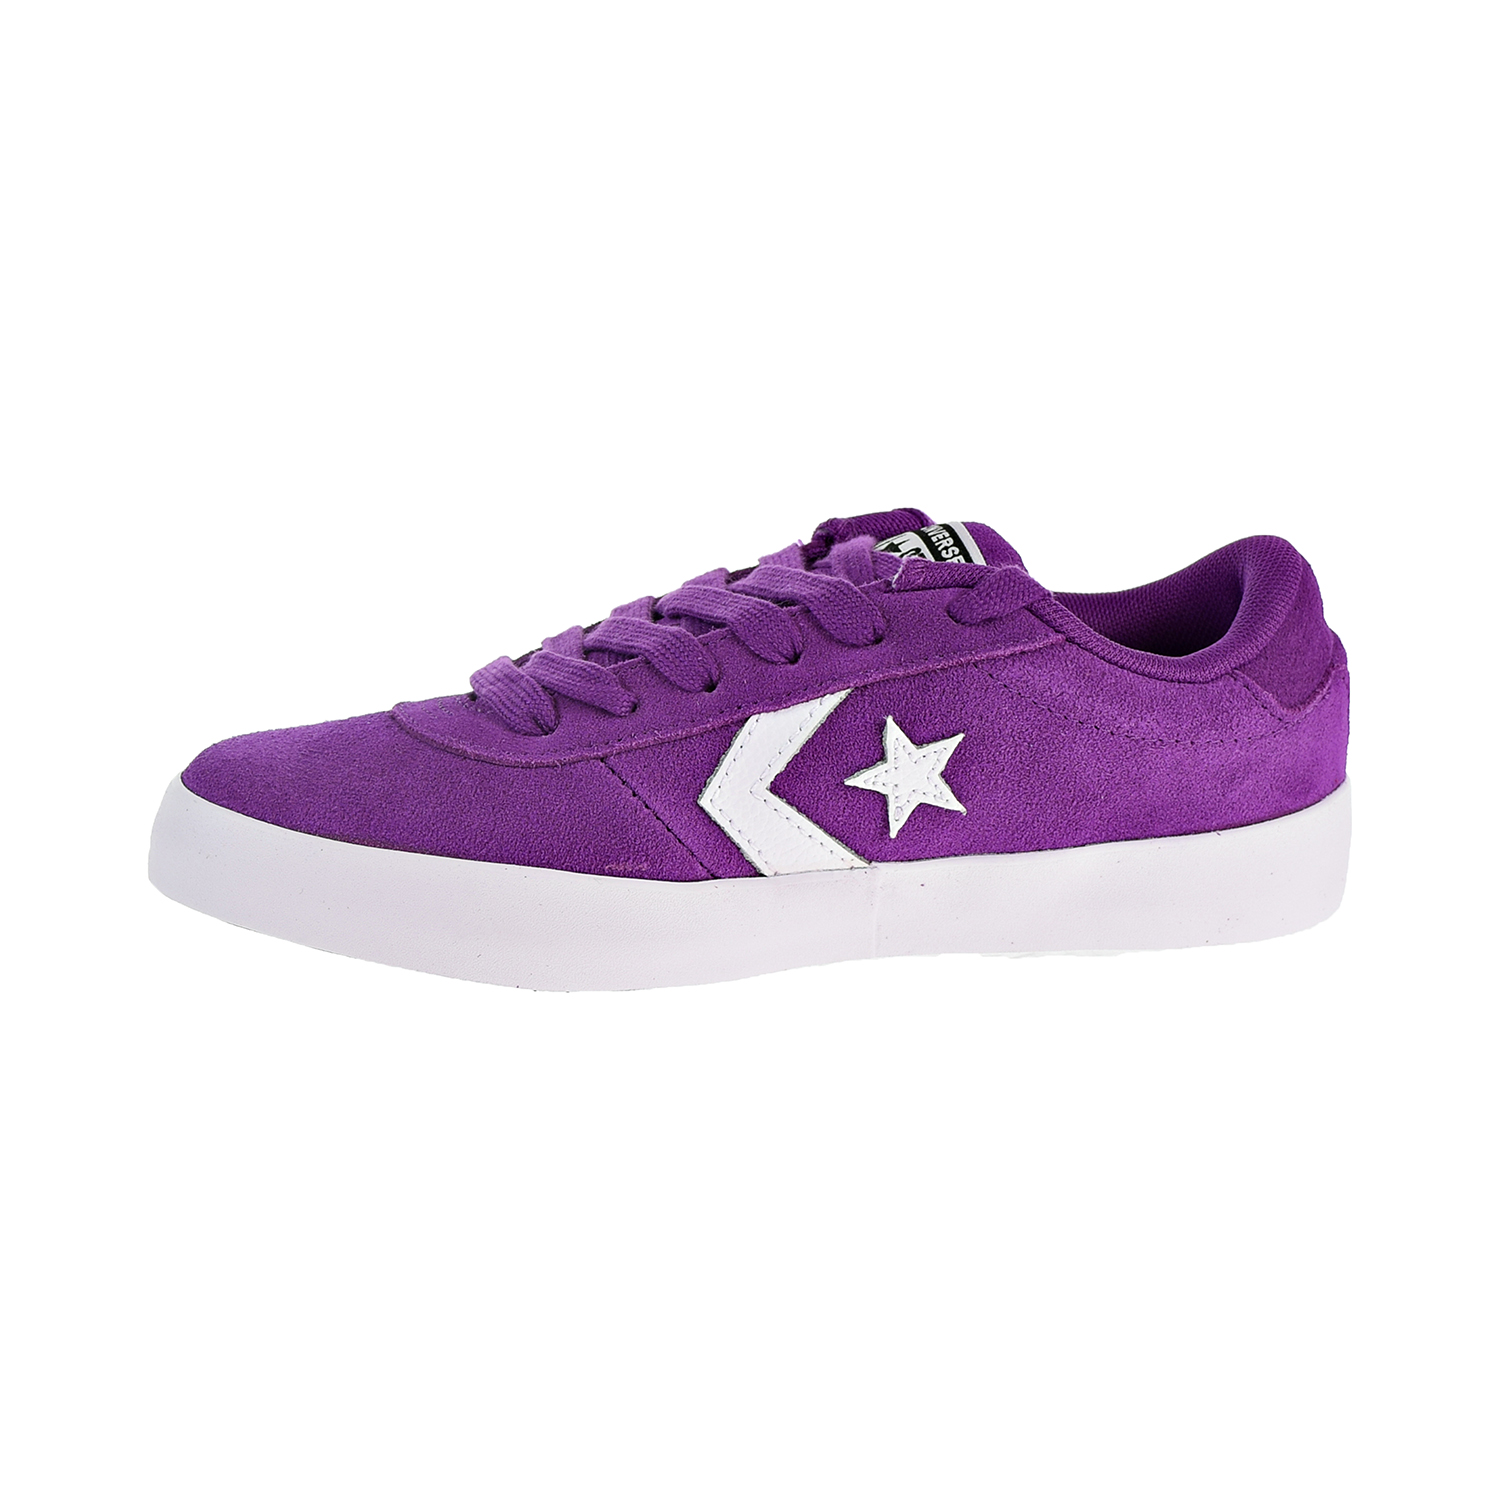 Converse Point Star Ox Women's Shoes Icon Violet-White-White 562609c | eBay